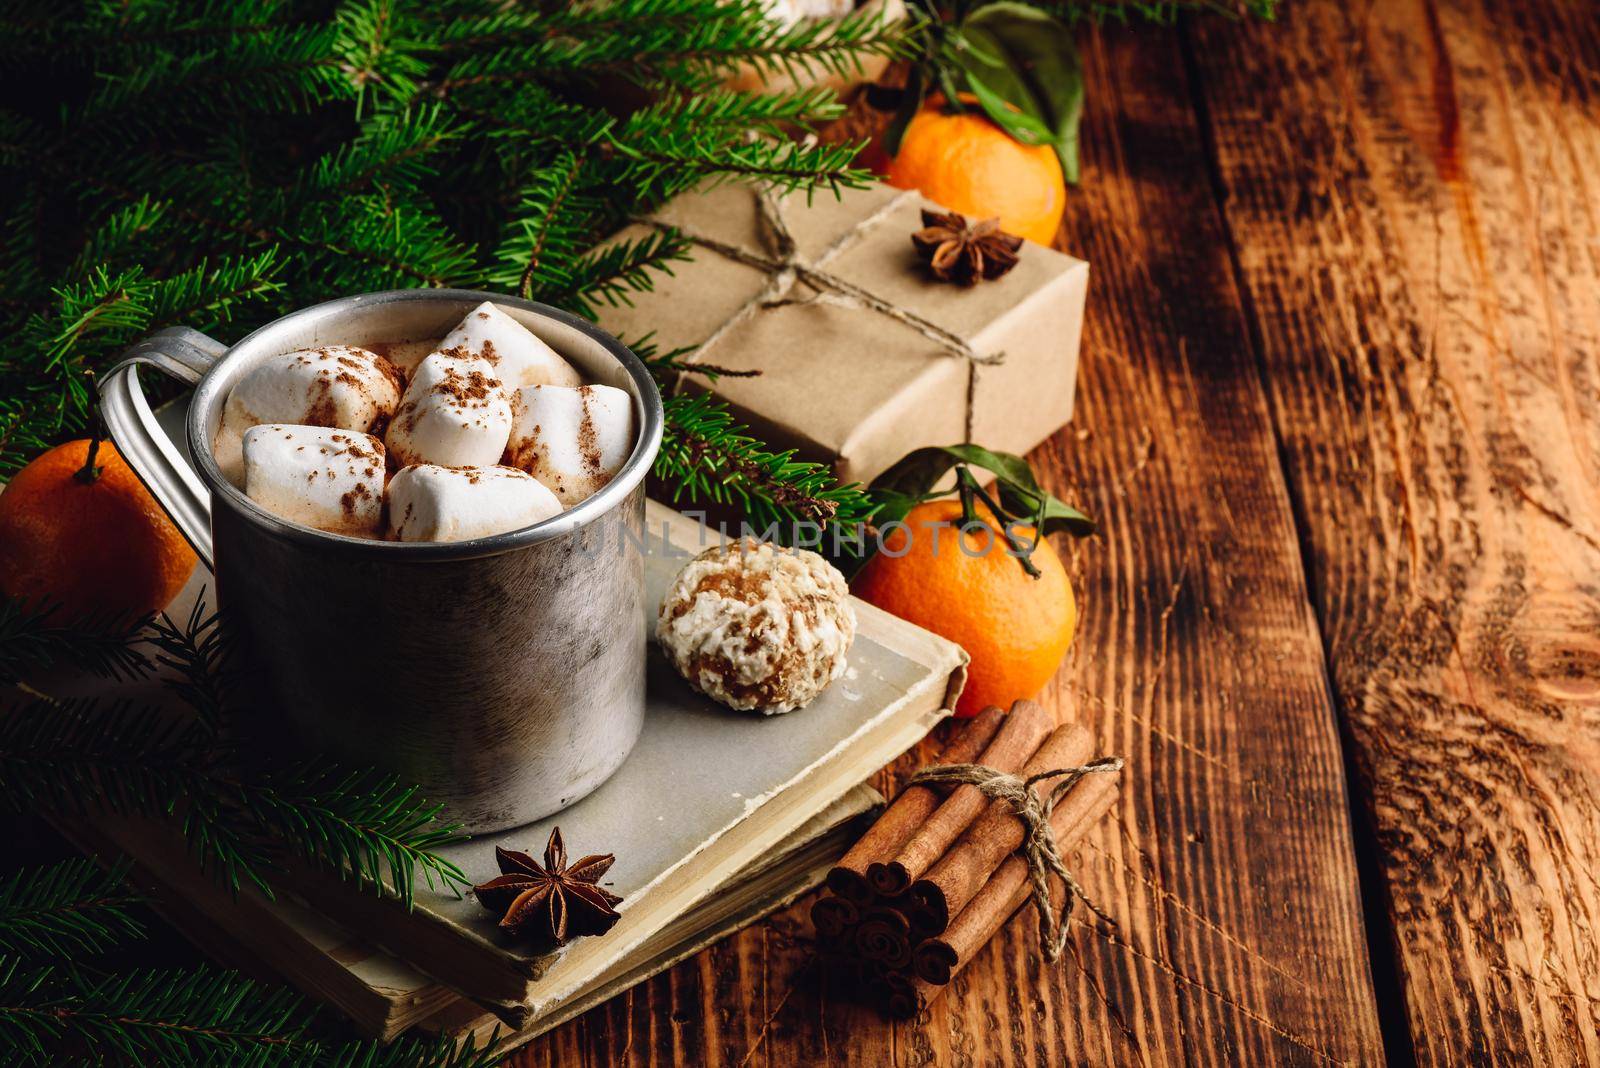 Mug of hot chocolate with marshmallows by Seva_blsv